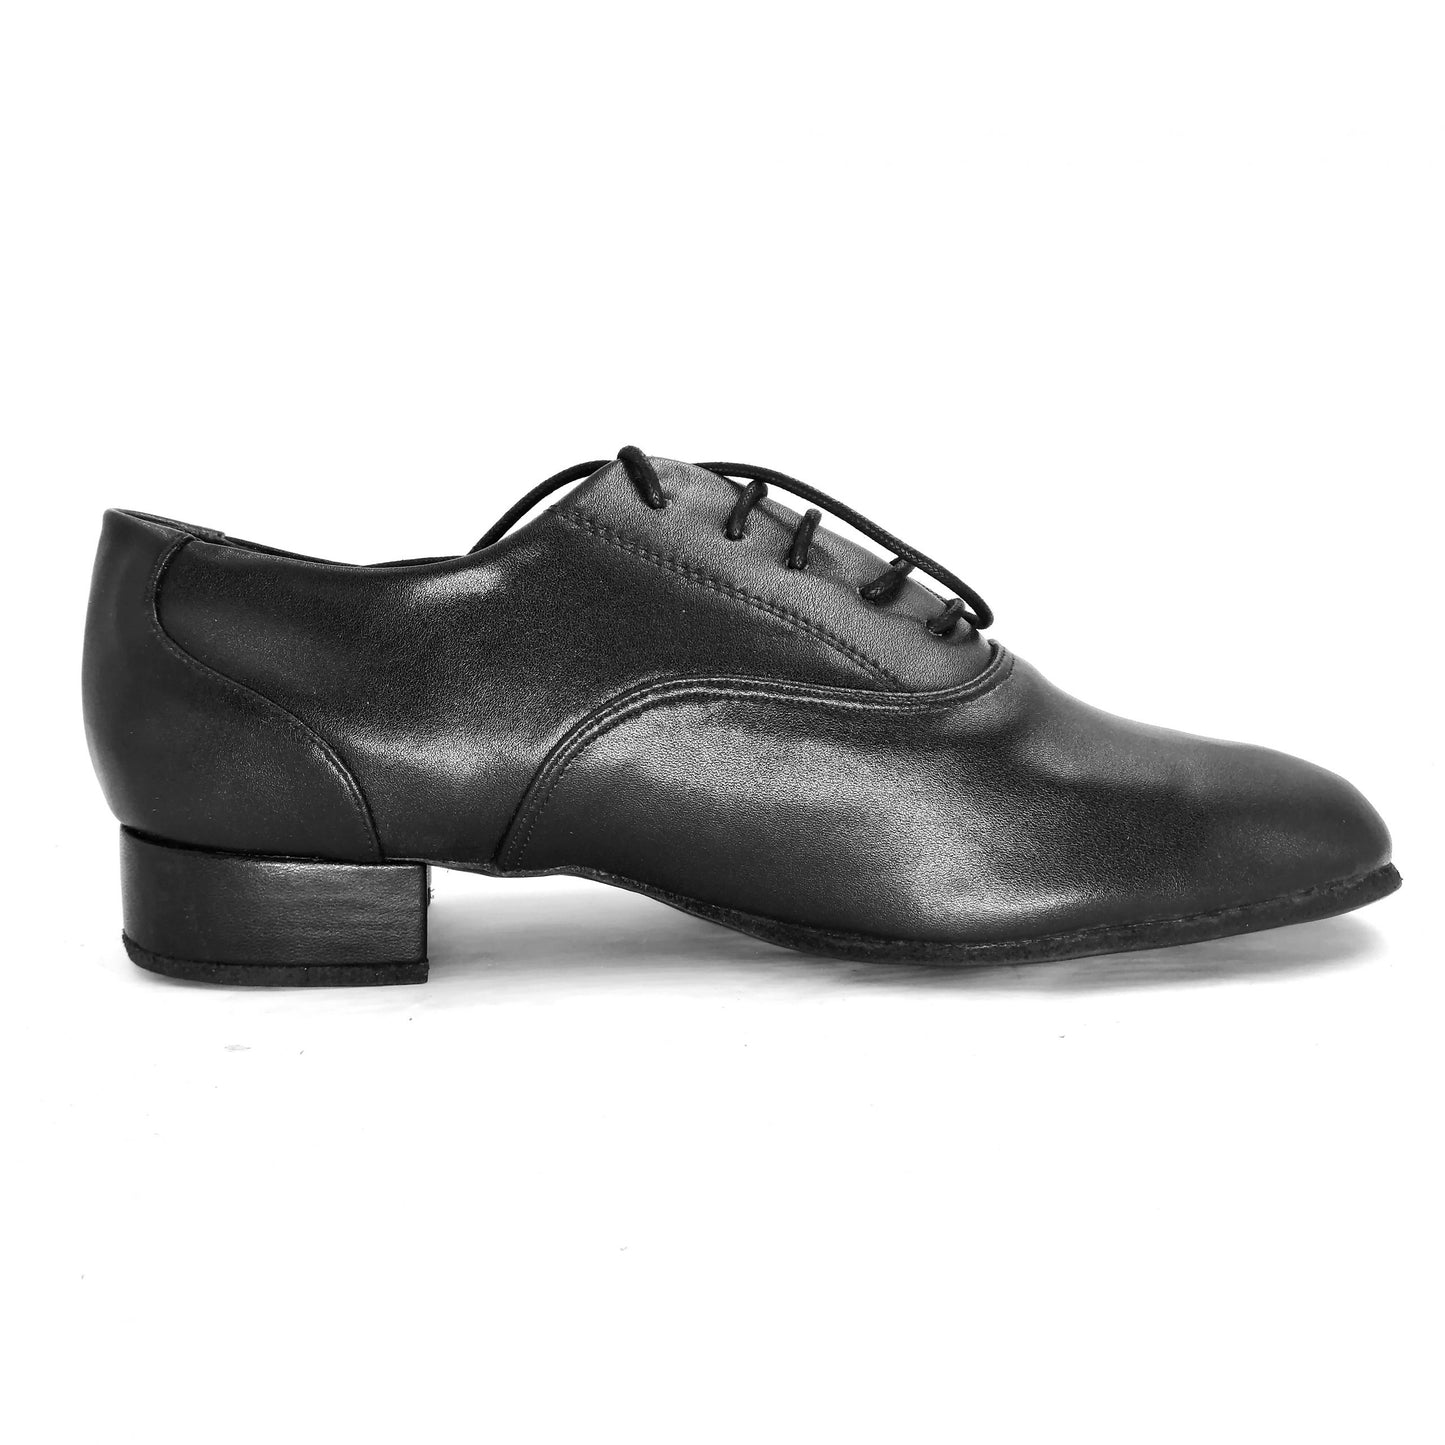 Pro Dancer Men's Argentine Tango Shoes Leather Sole 1 inch Heel Lace-up Black (PD1001A)